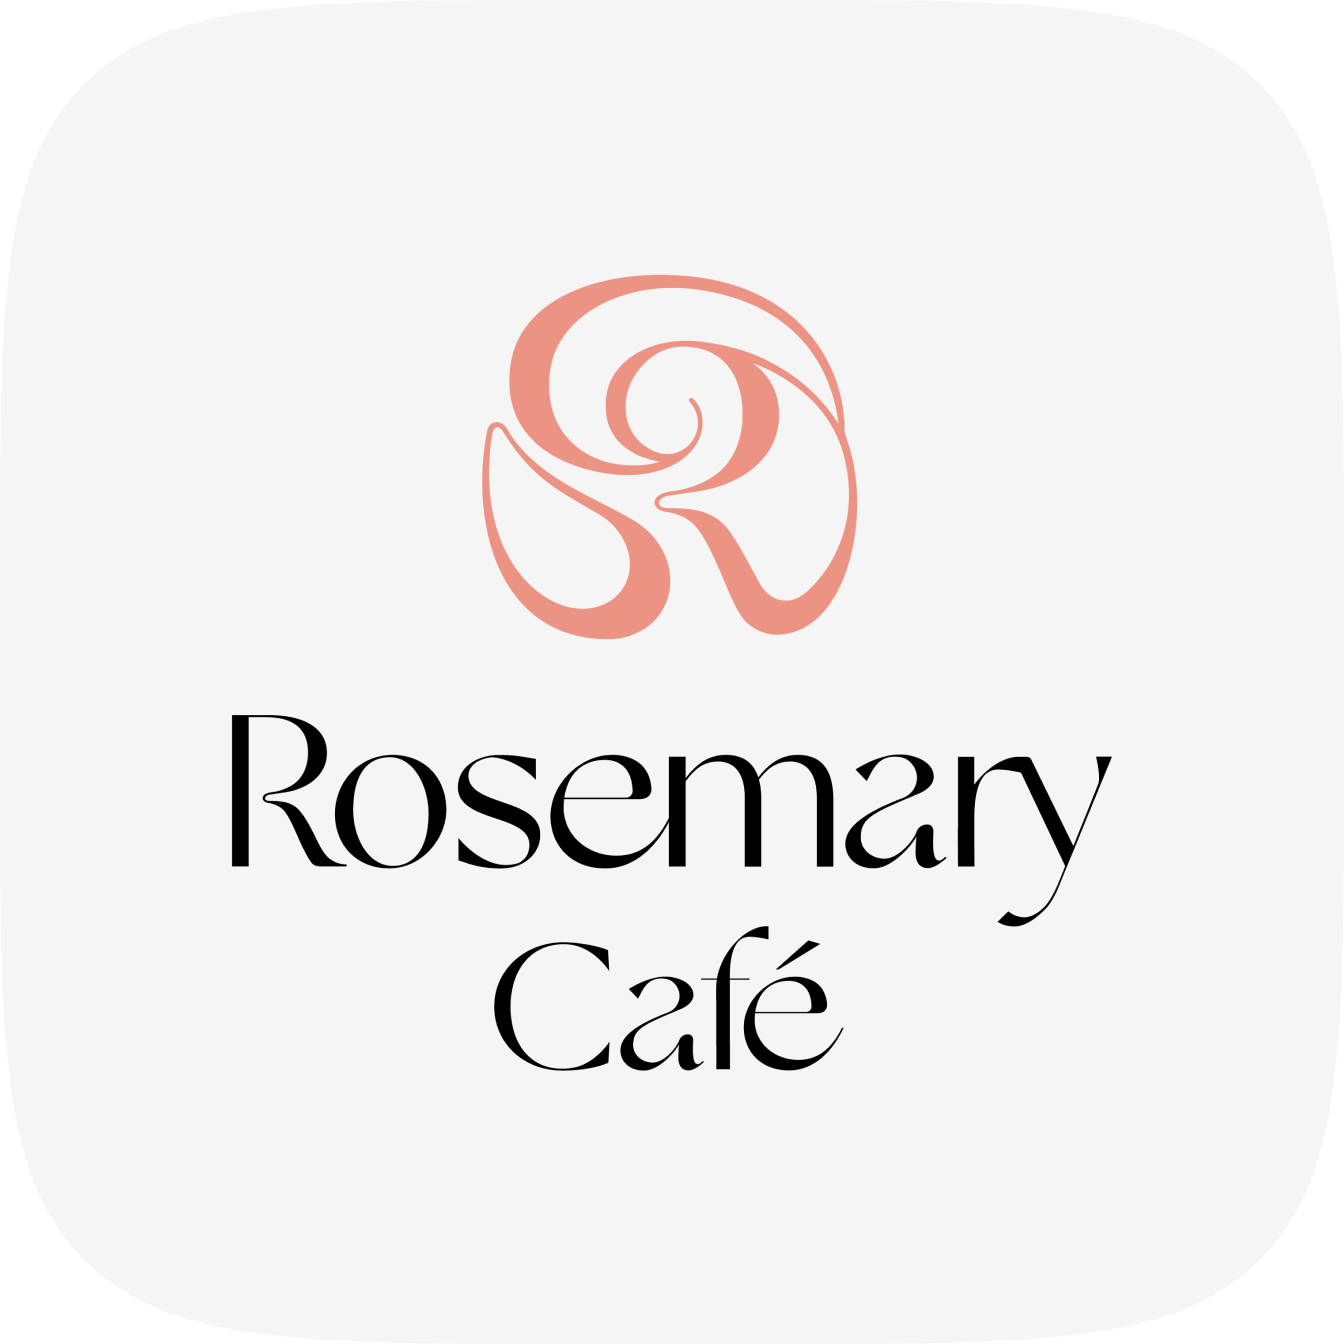 Rose Mary Cafe